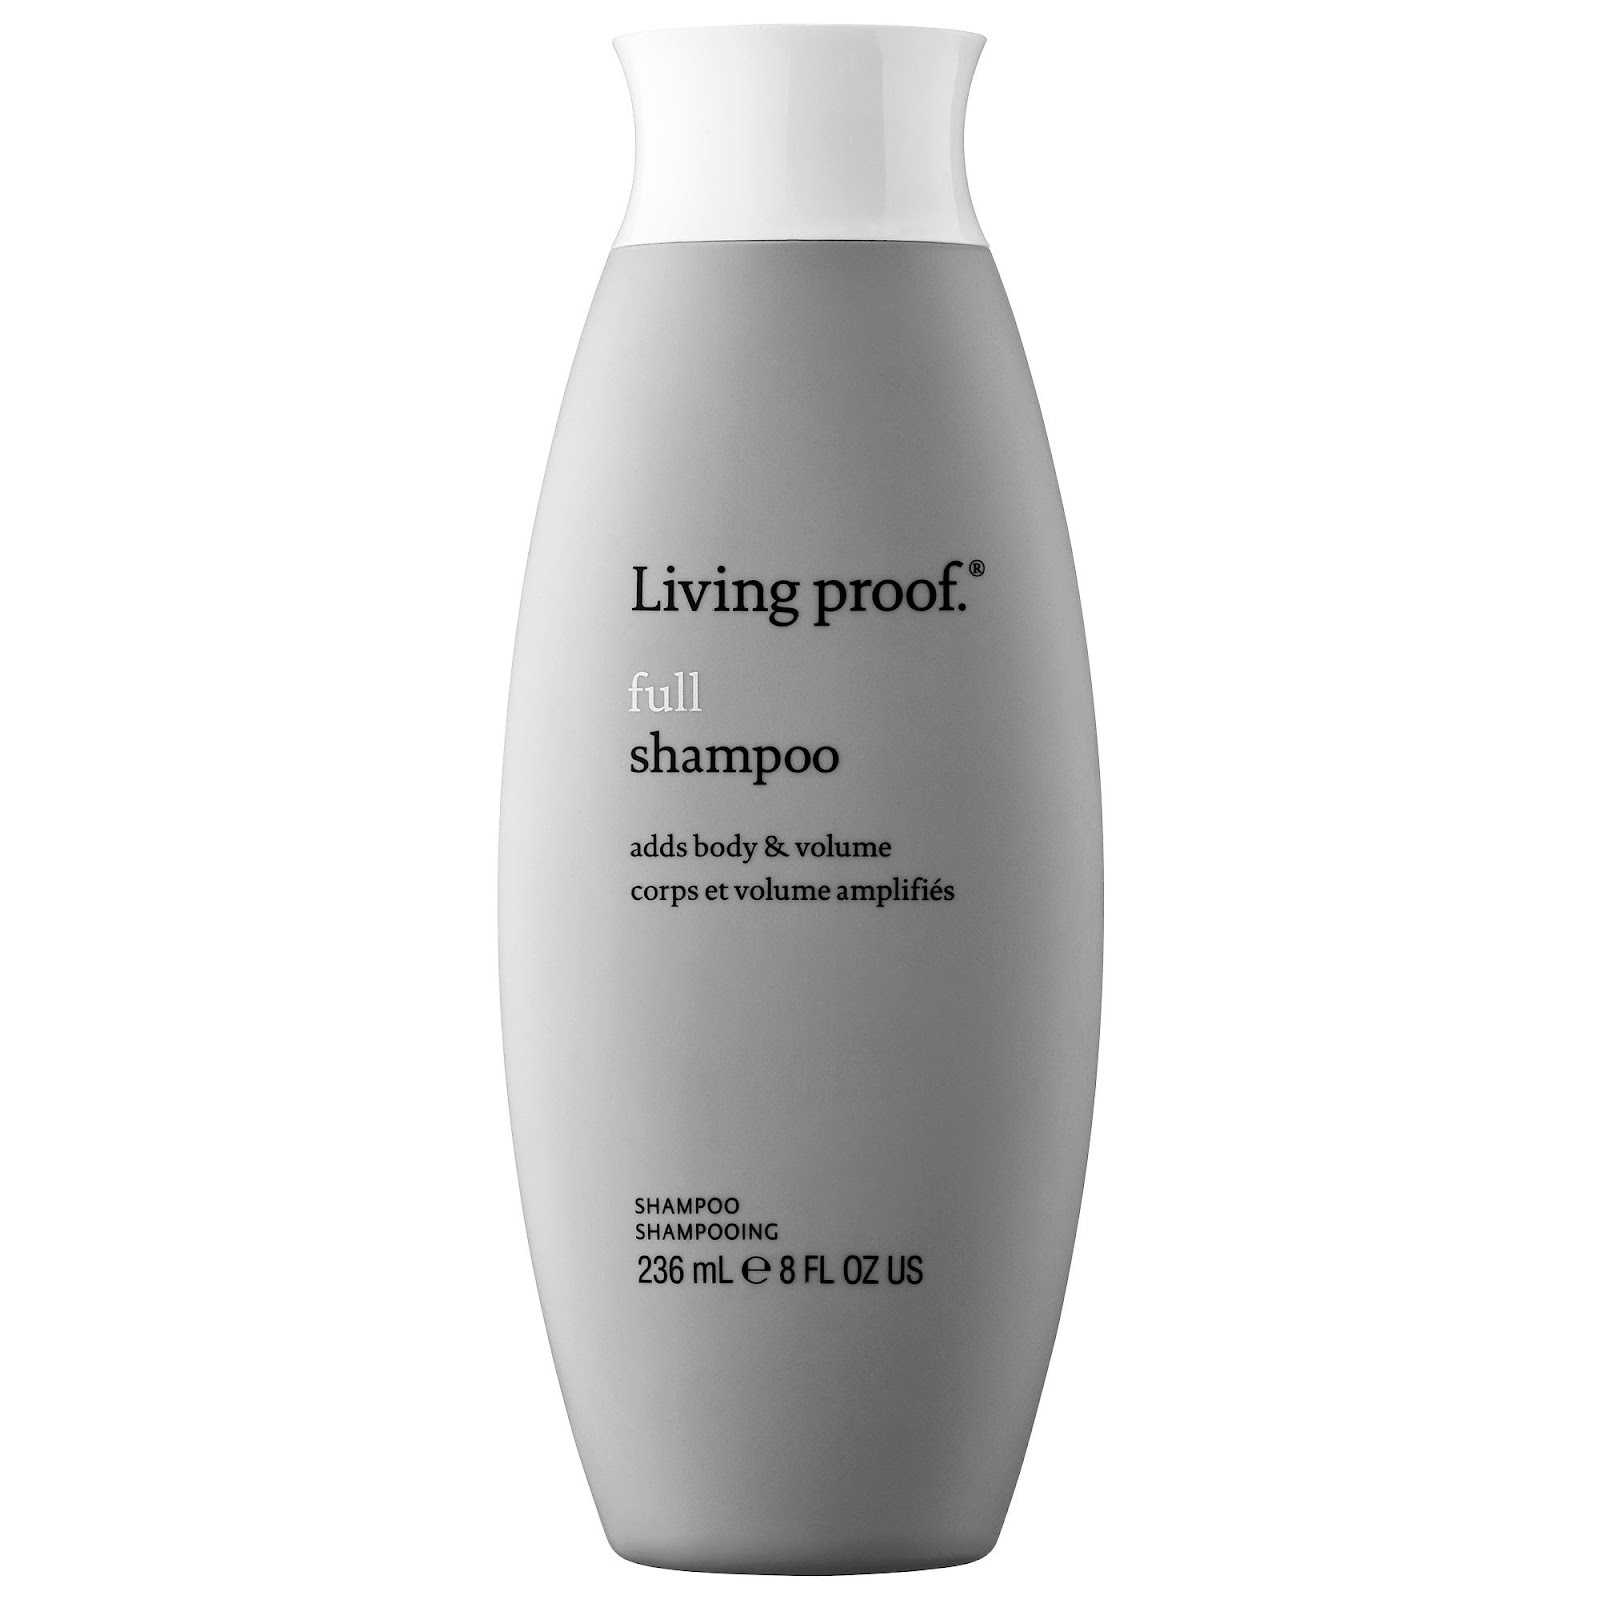 Living Proof Full Shampoo Review